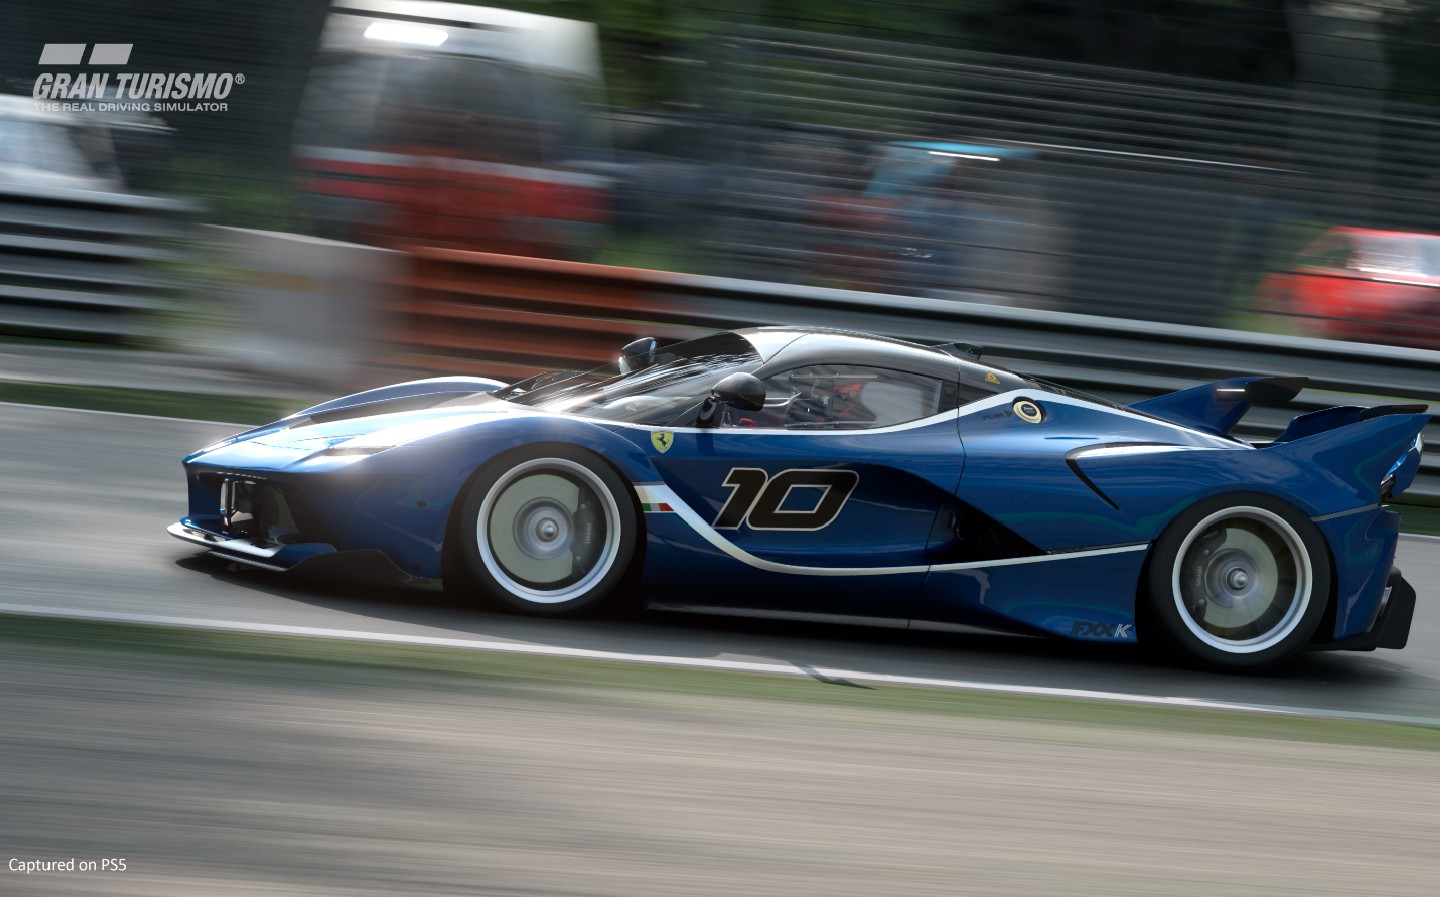 Gran Turismo 7 review: A triumphant return to form for